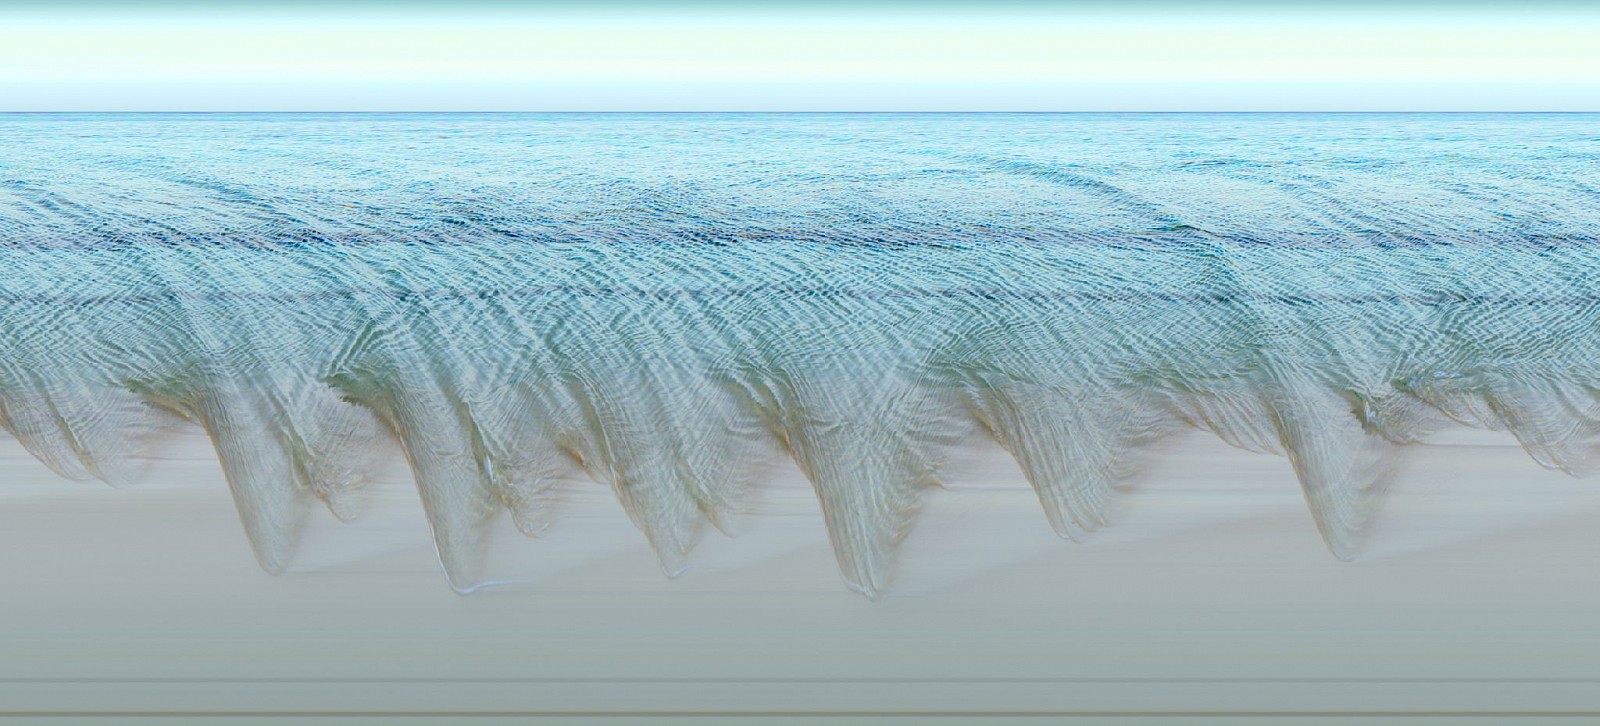 Jay Mark Johnson, COZUMEL WAVES #15, 2009 Cozumel MX
archival pigment on paper, mounted on aluminum, 40 x 88 in. (101.6 x 223.5 cm)